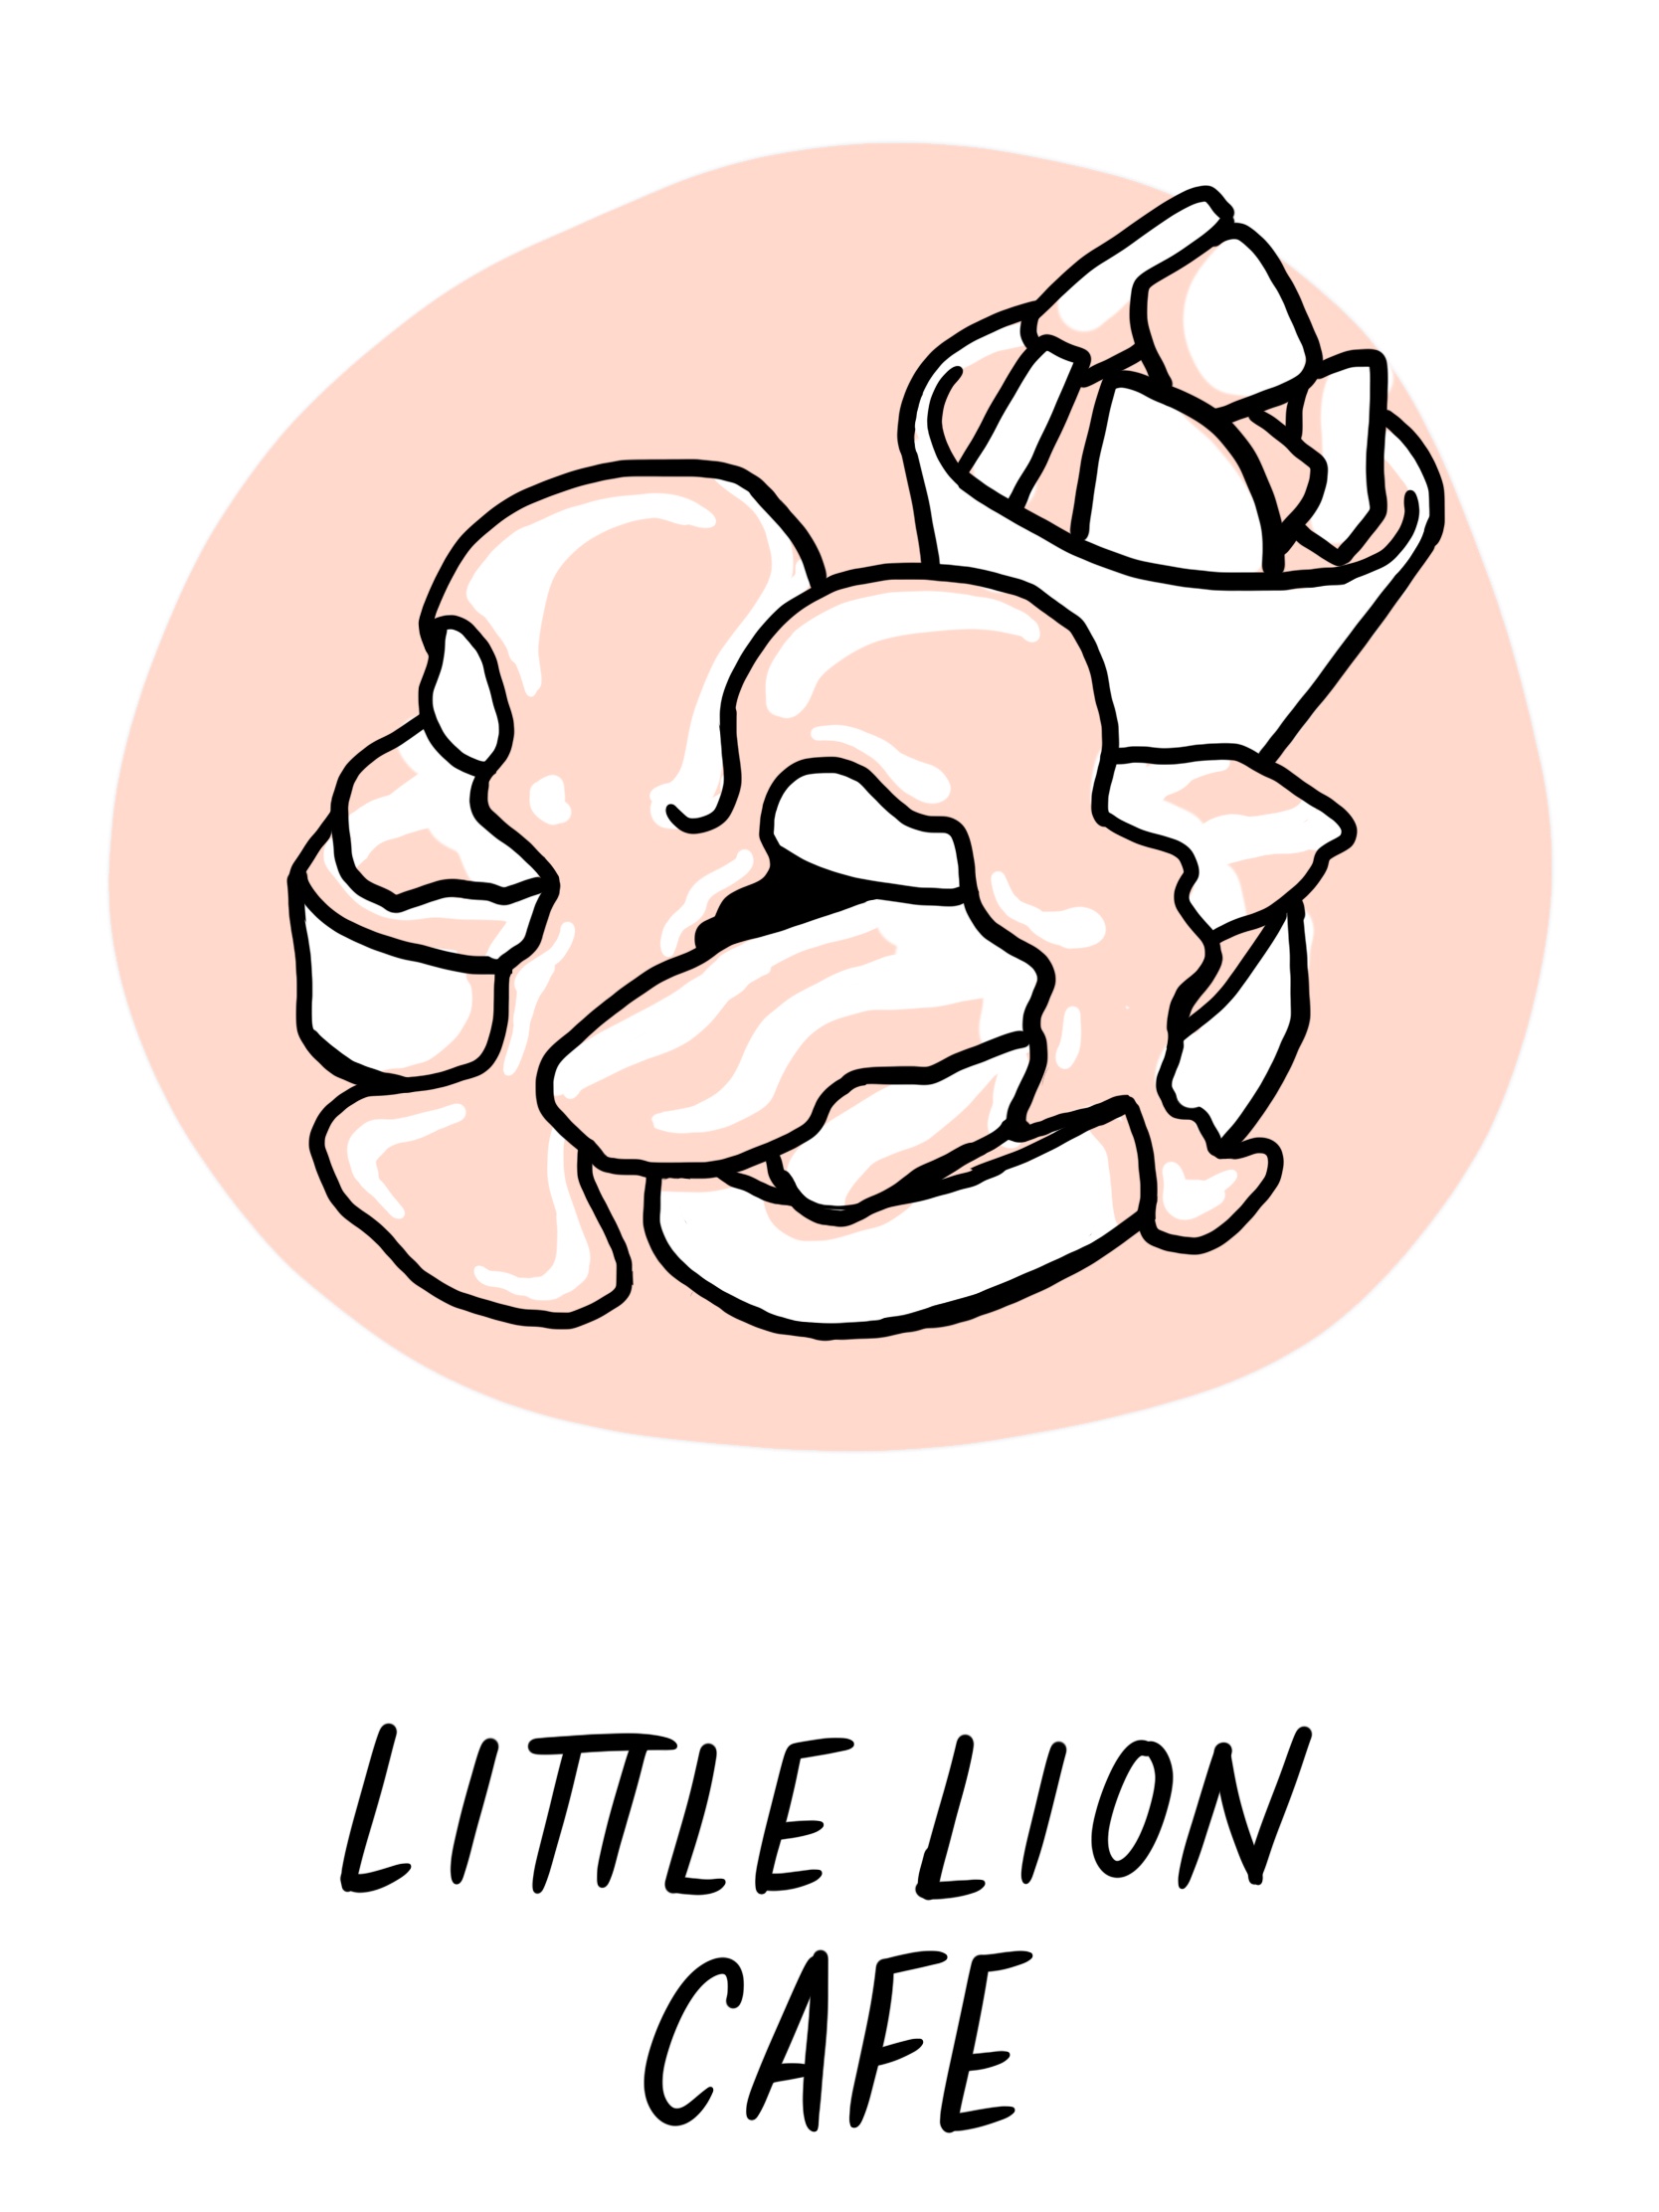 LittleLion